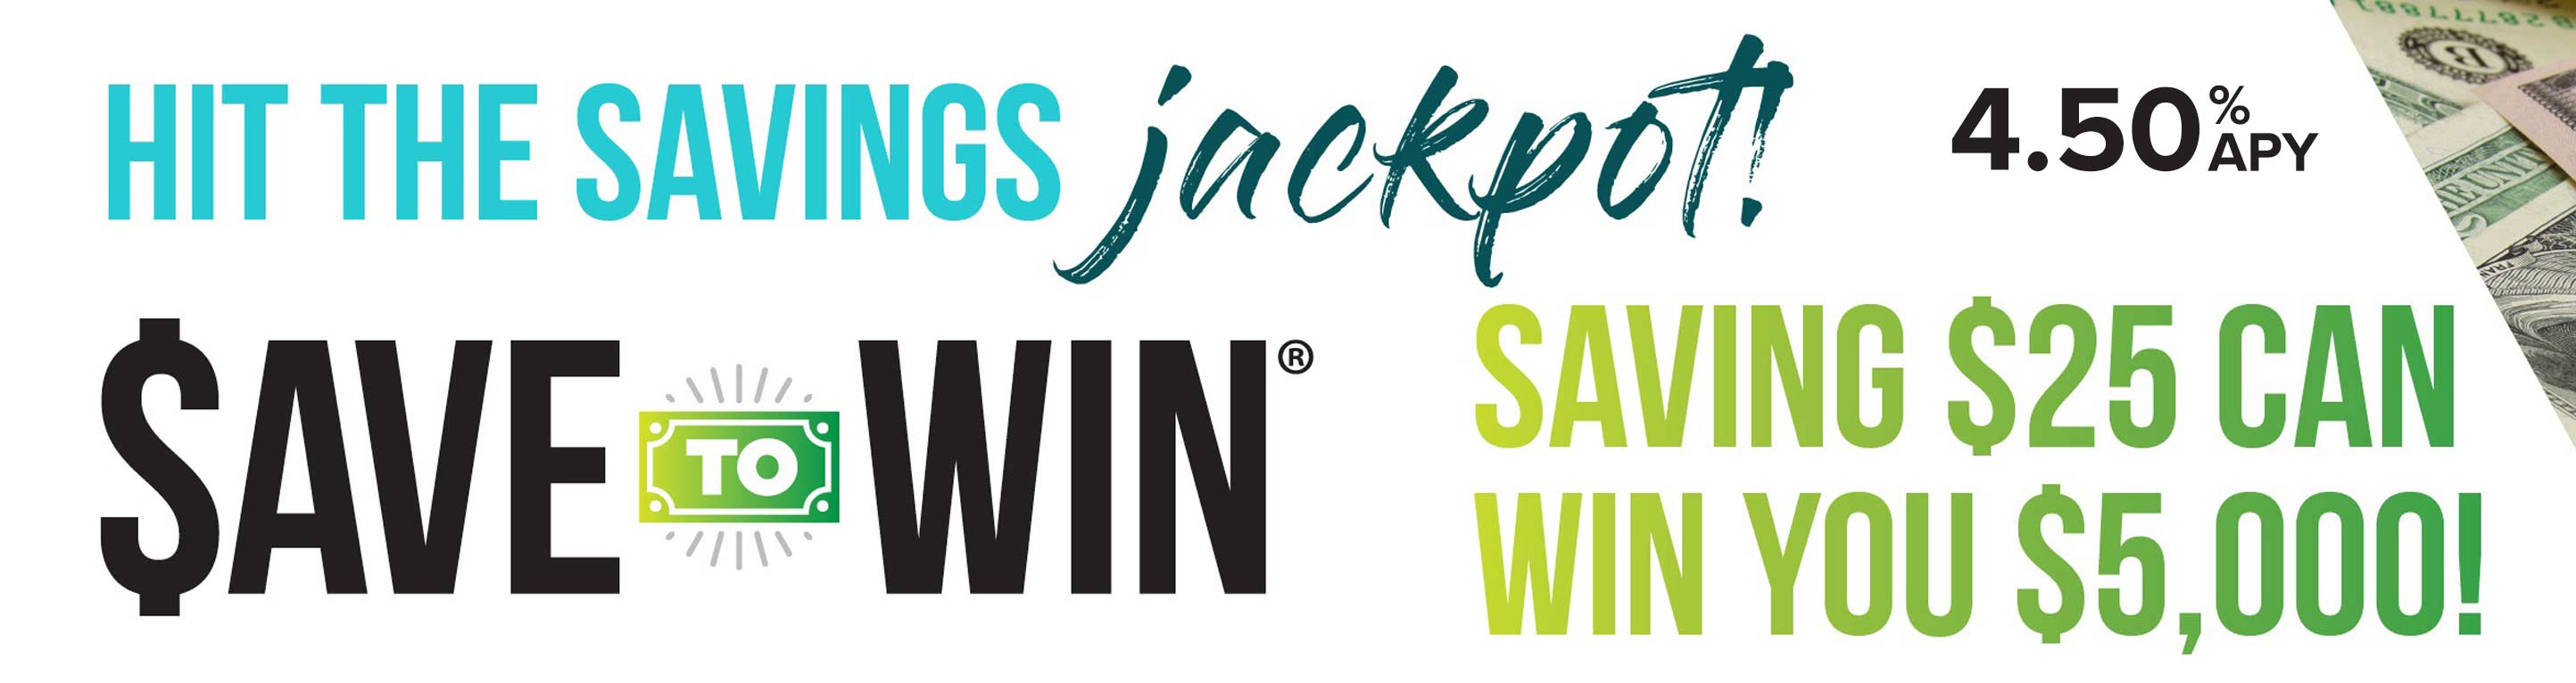 Hit the savings jackpot. Save to win. Savings $25 can win you $5,000. 4.50% APY